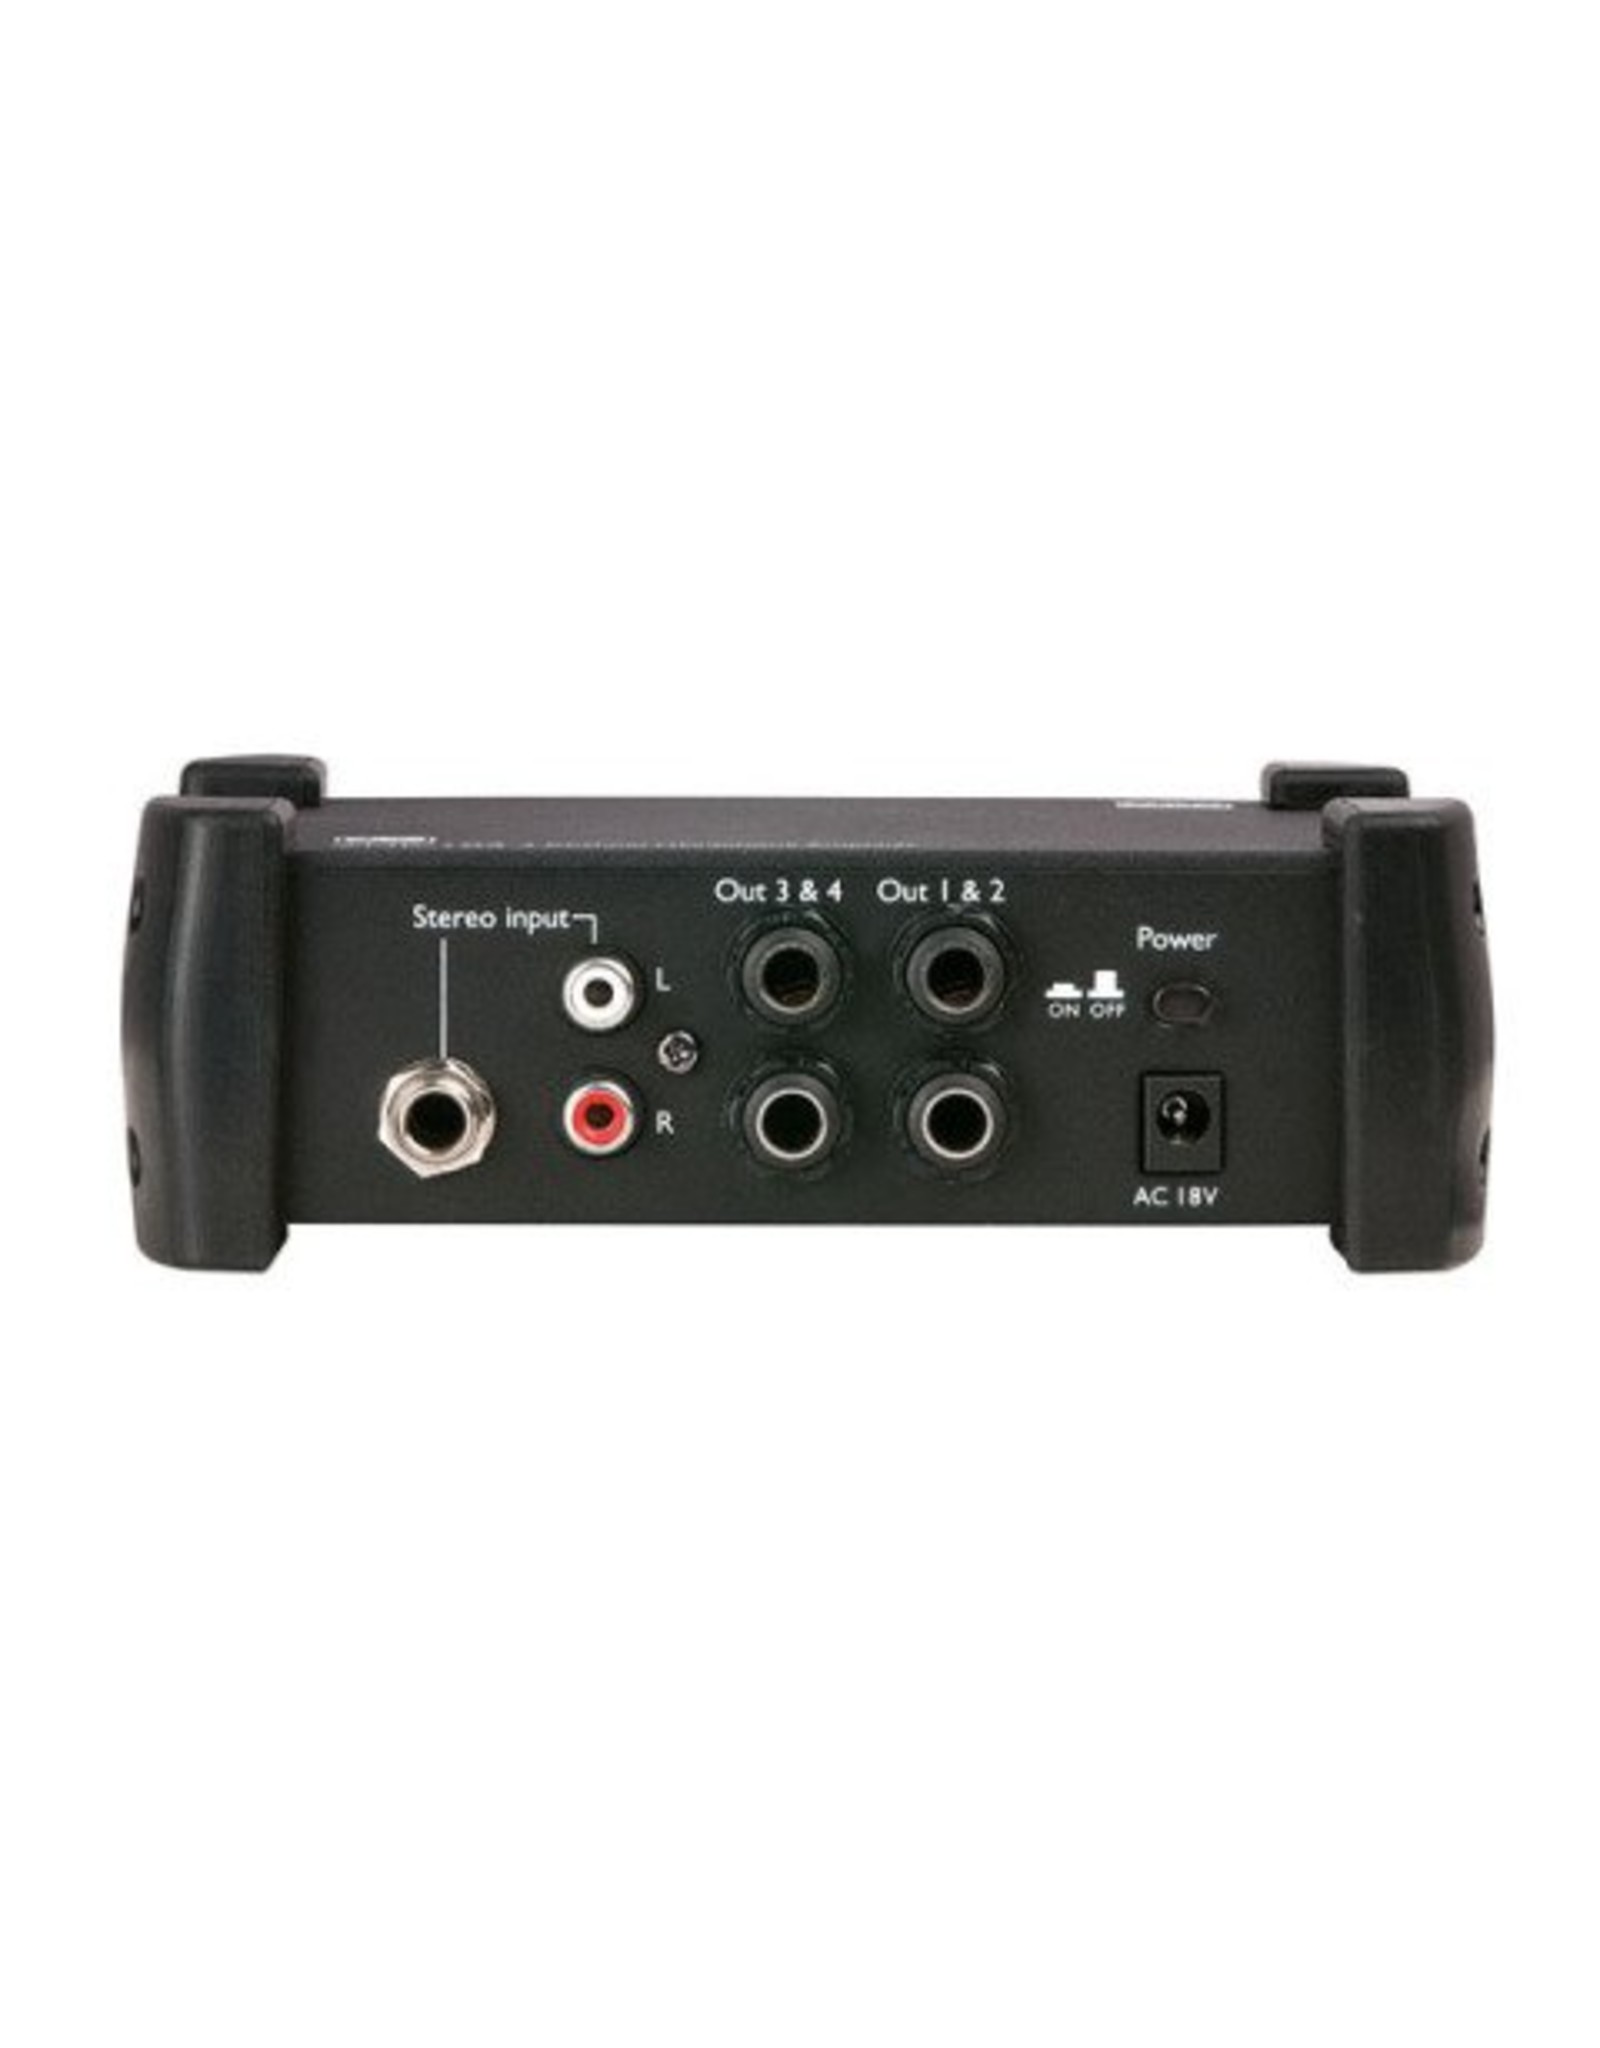 DAP audio pro DAP Audio AMP-104 4 Channel Headphone Amplifier headphone mixer D1536